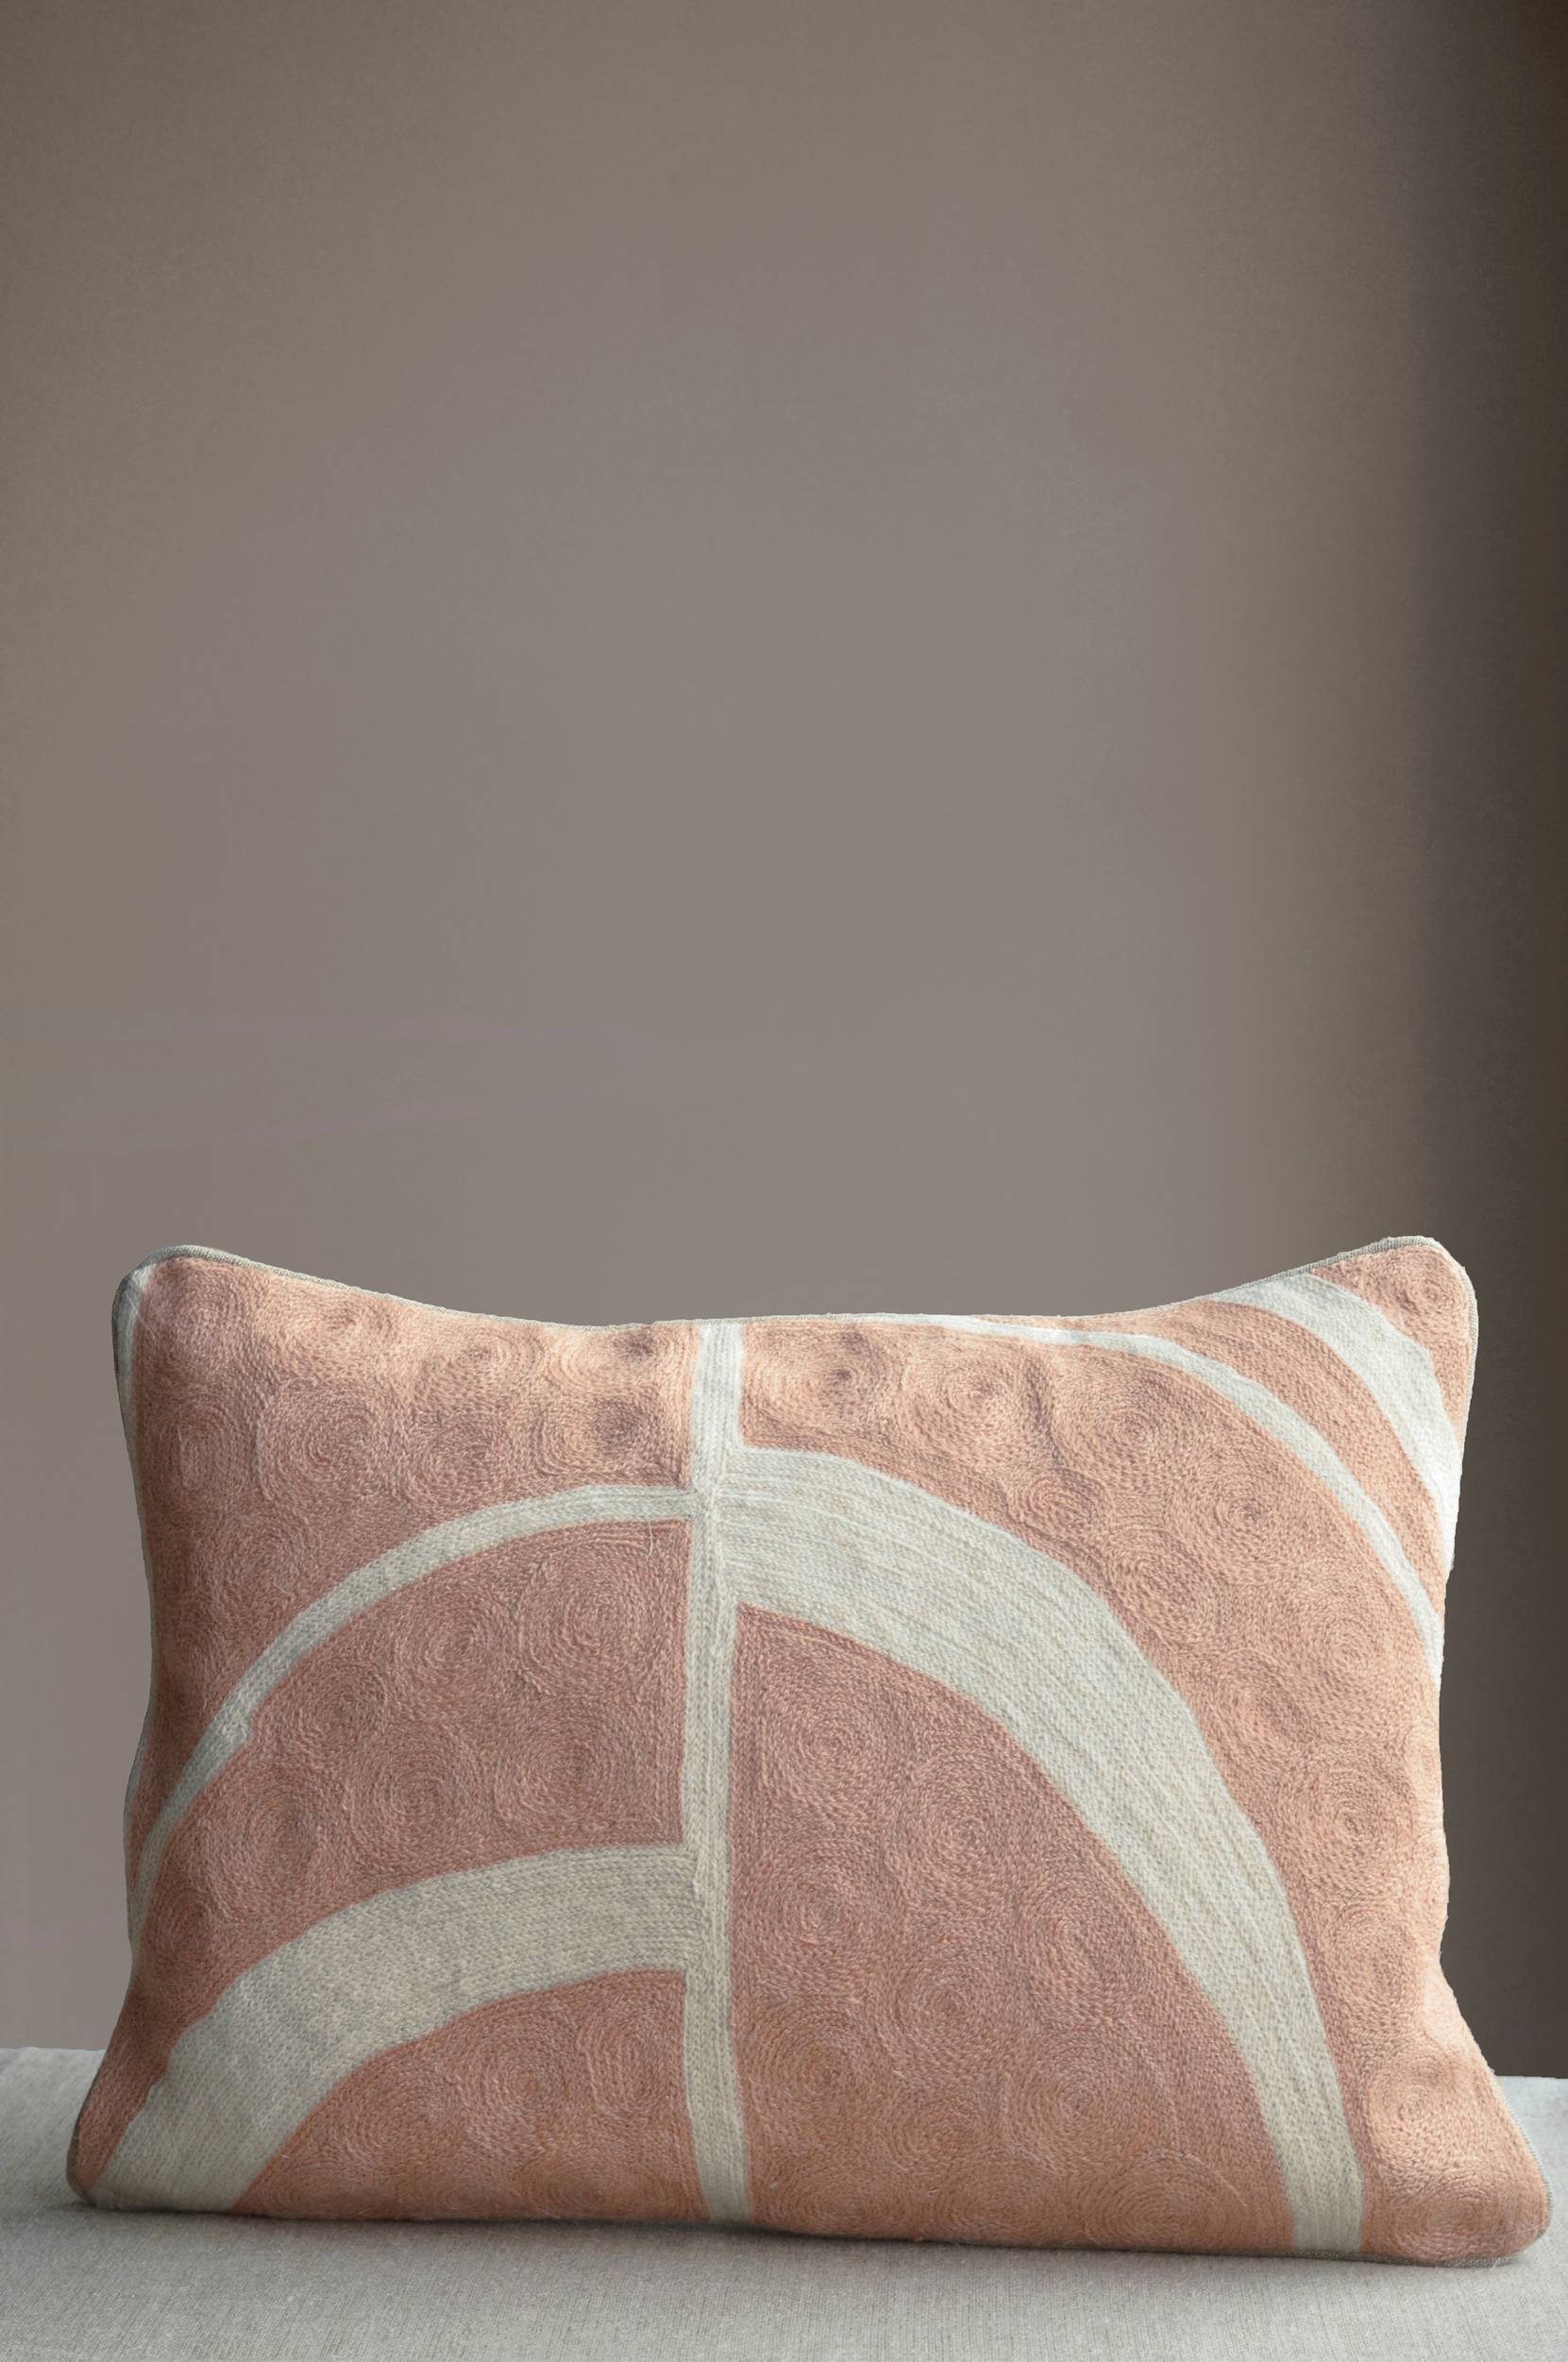 Arches tyyny, käsinbrodeerattu, 30x50 cm, Mimou